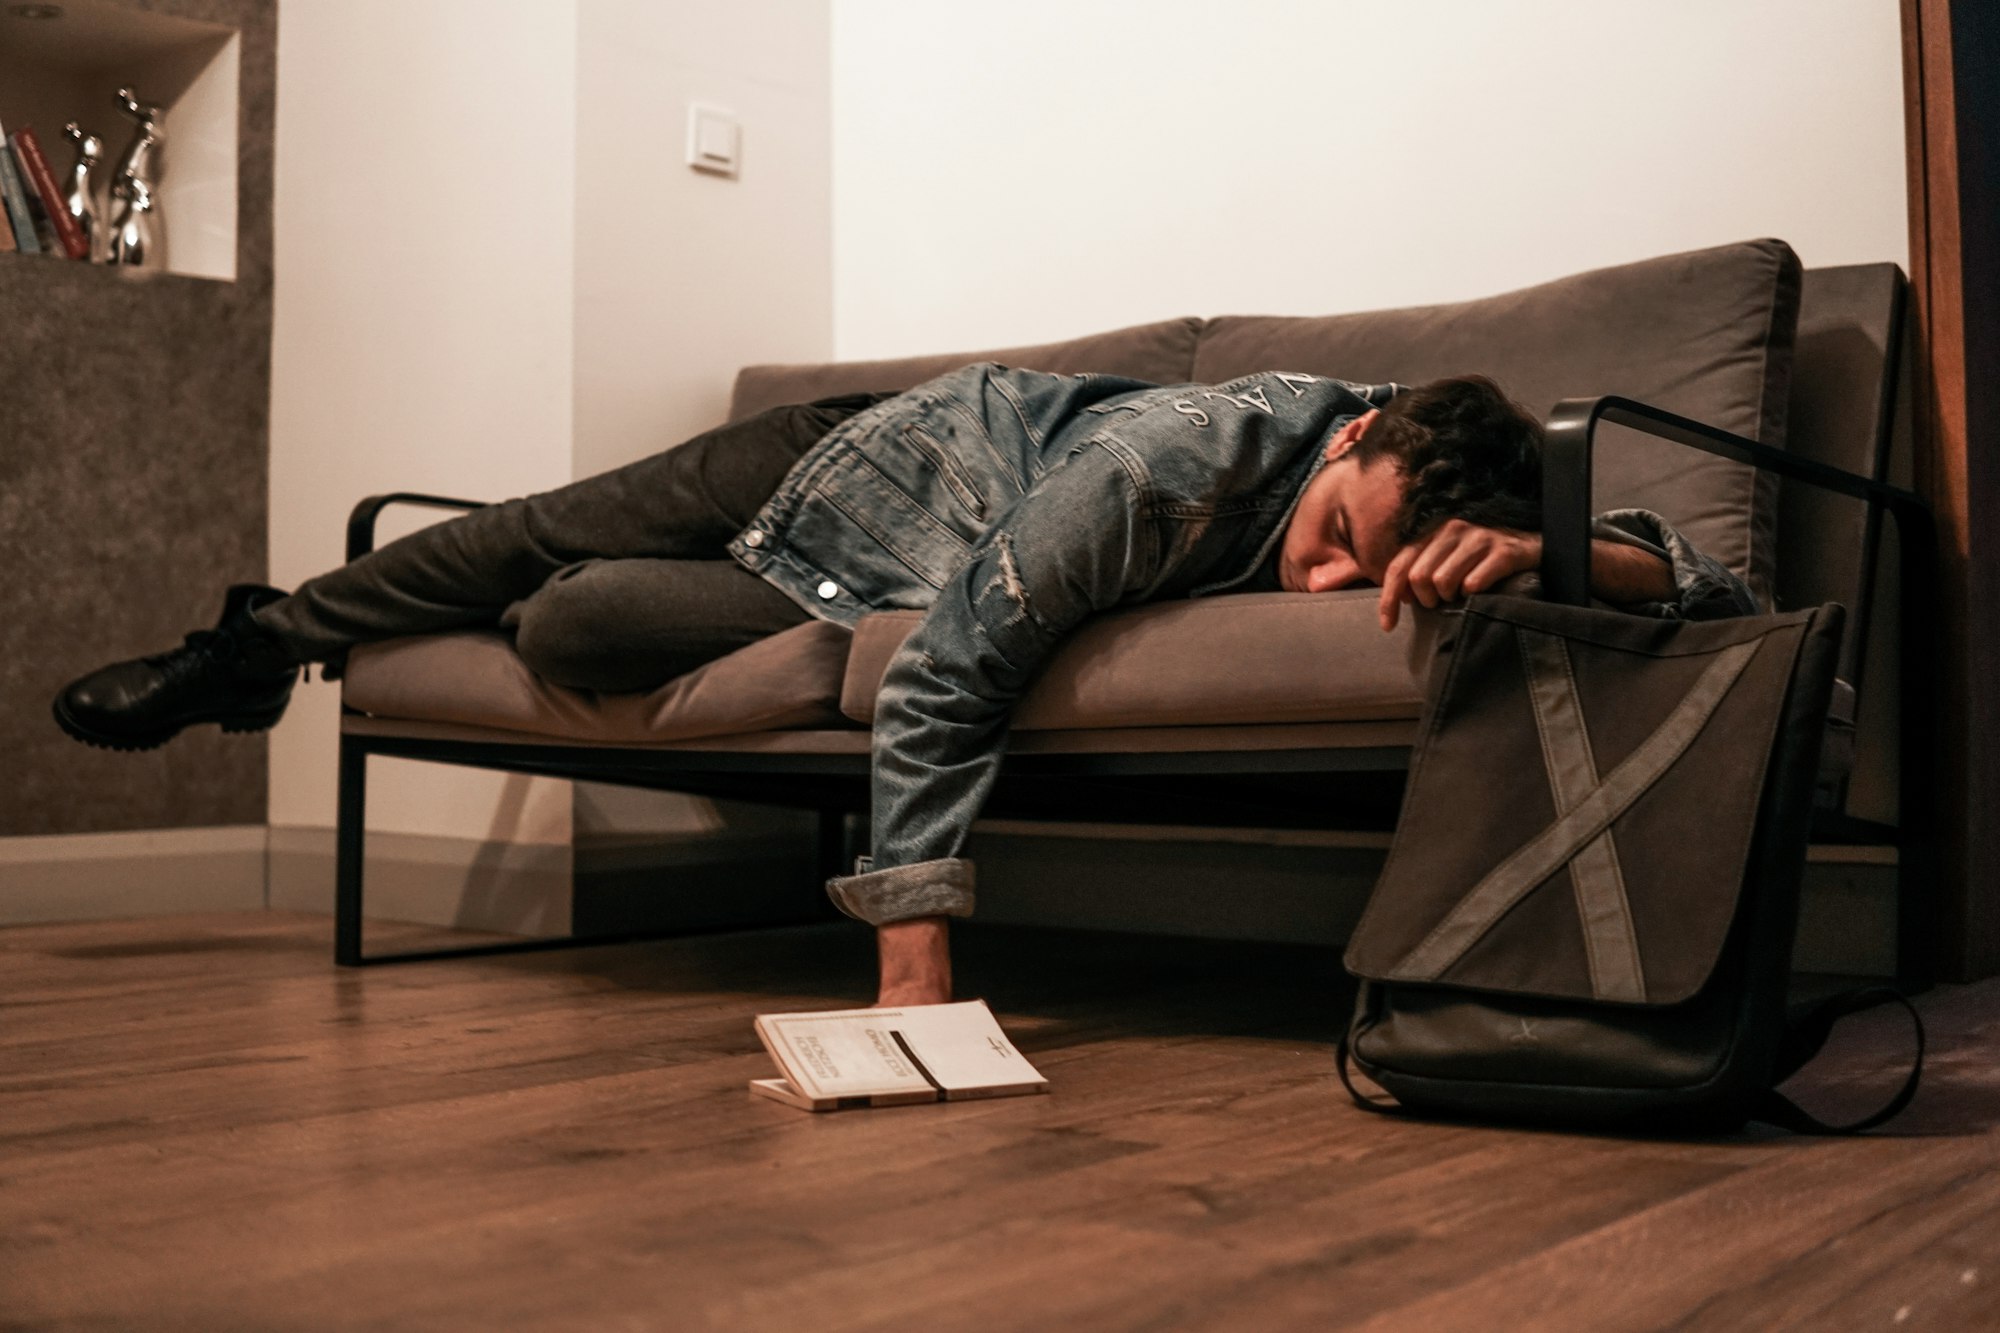 Man sleeping on a sofa - wornbee.com